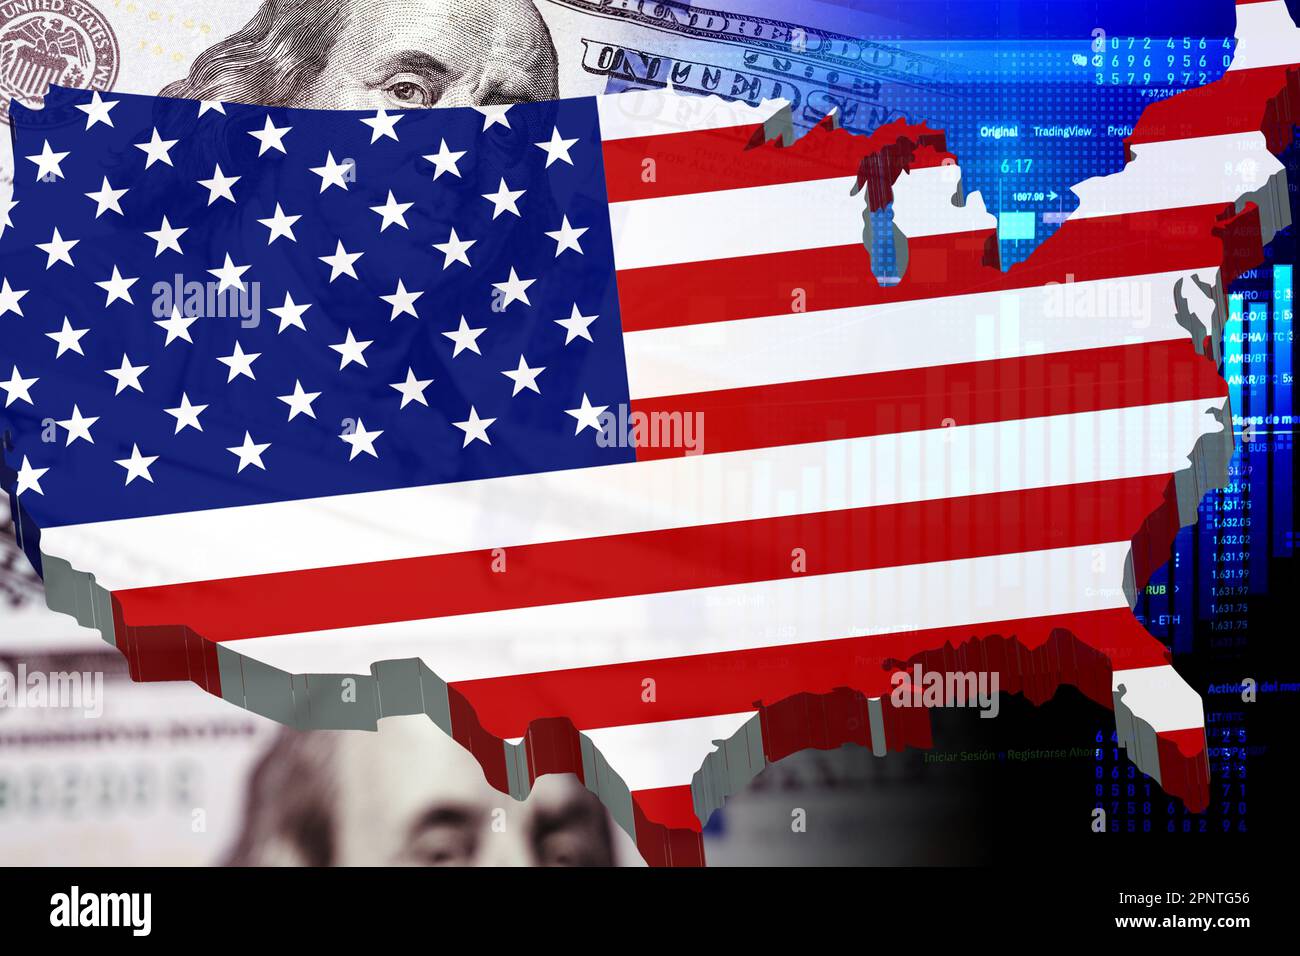 USA map and flag, dollar cash bills and stock market indicators (economy, money, inflation, crisis, markets, finance, business) Stock Photo